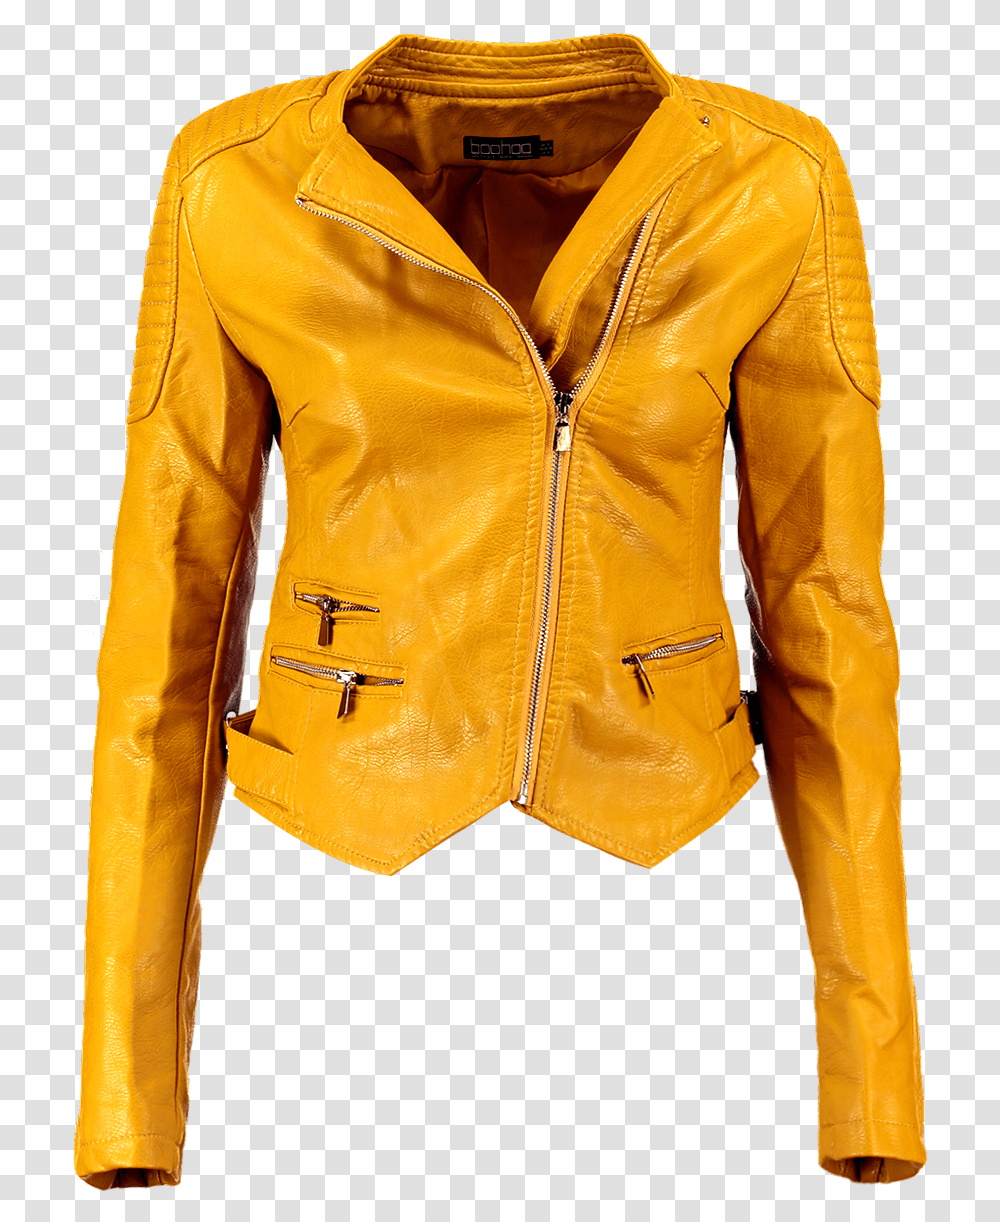 Yellow Jacket Download Jacket, Apparel, Coat, Leather Jacket Transparent Png